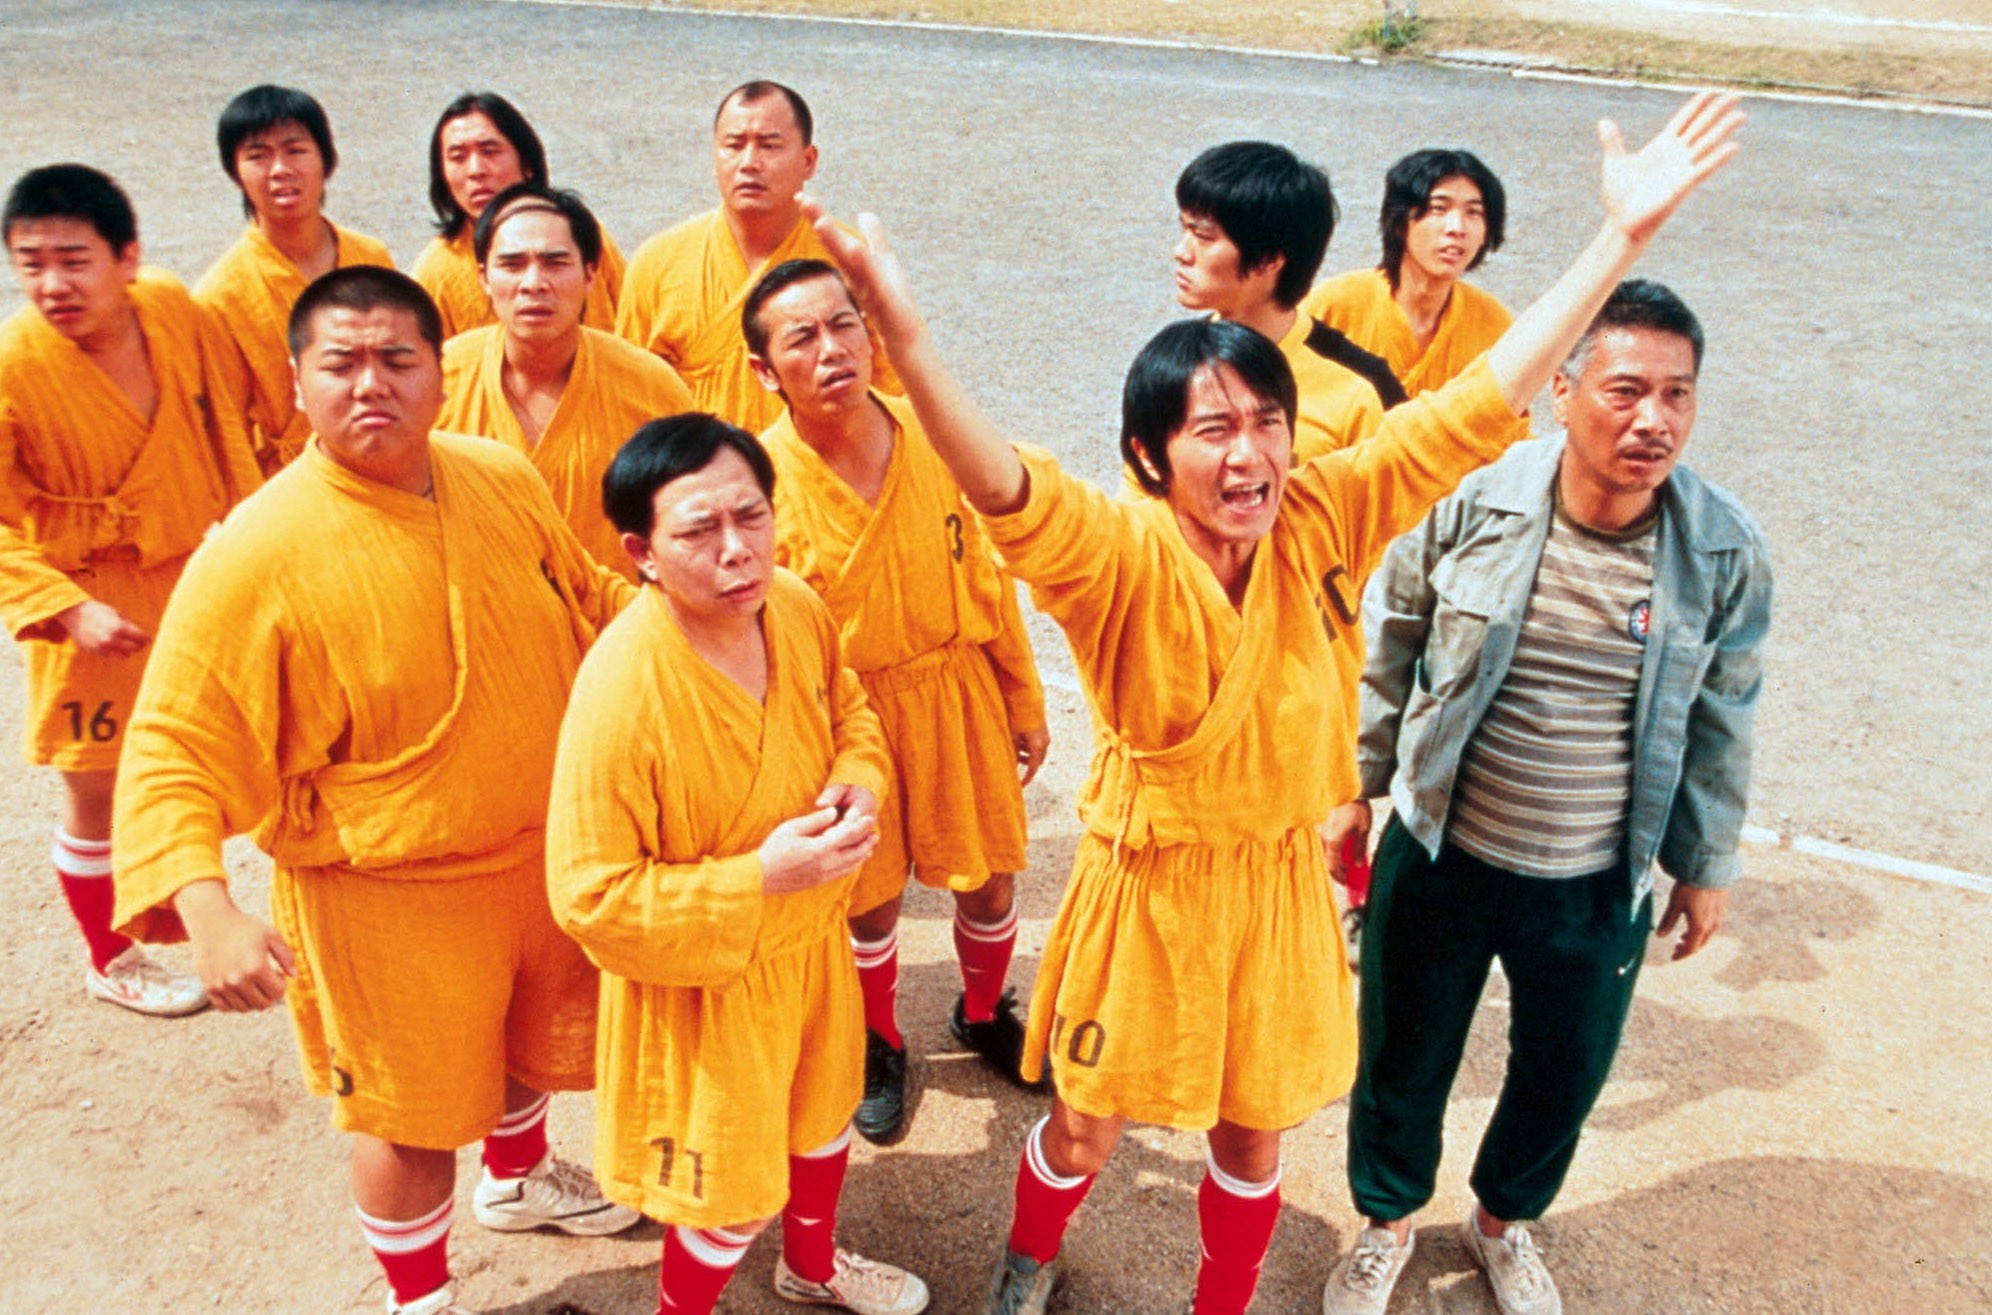 Image du film Shaolin Soccer 19e10431-4ae7-4da0-9b45-9ab51112d252